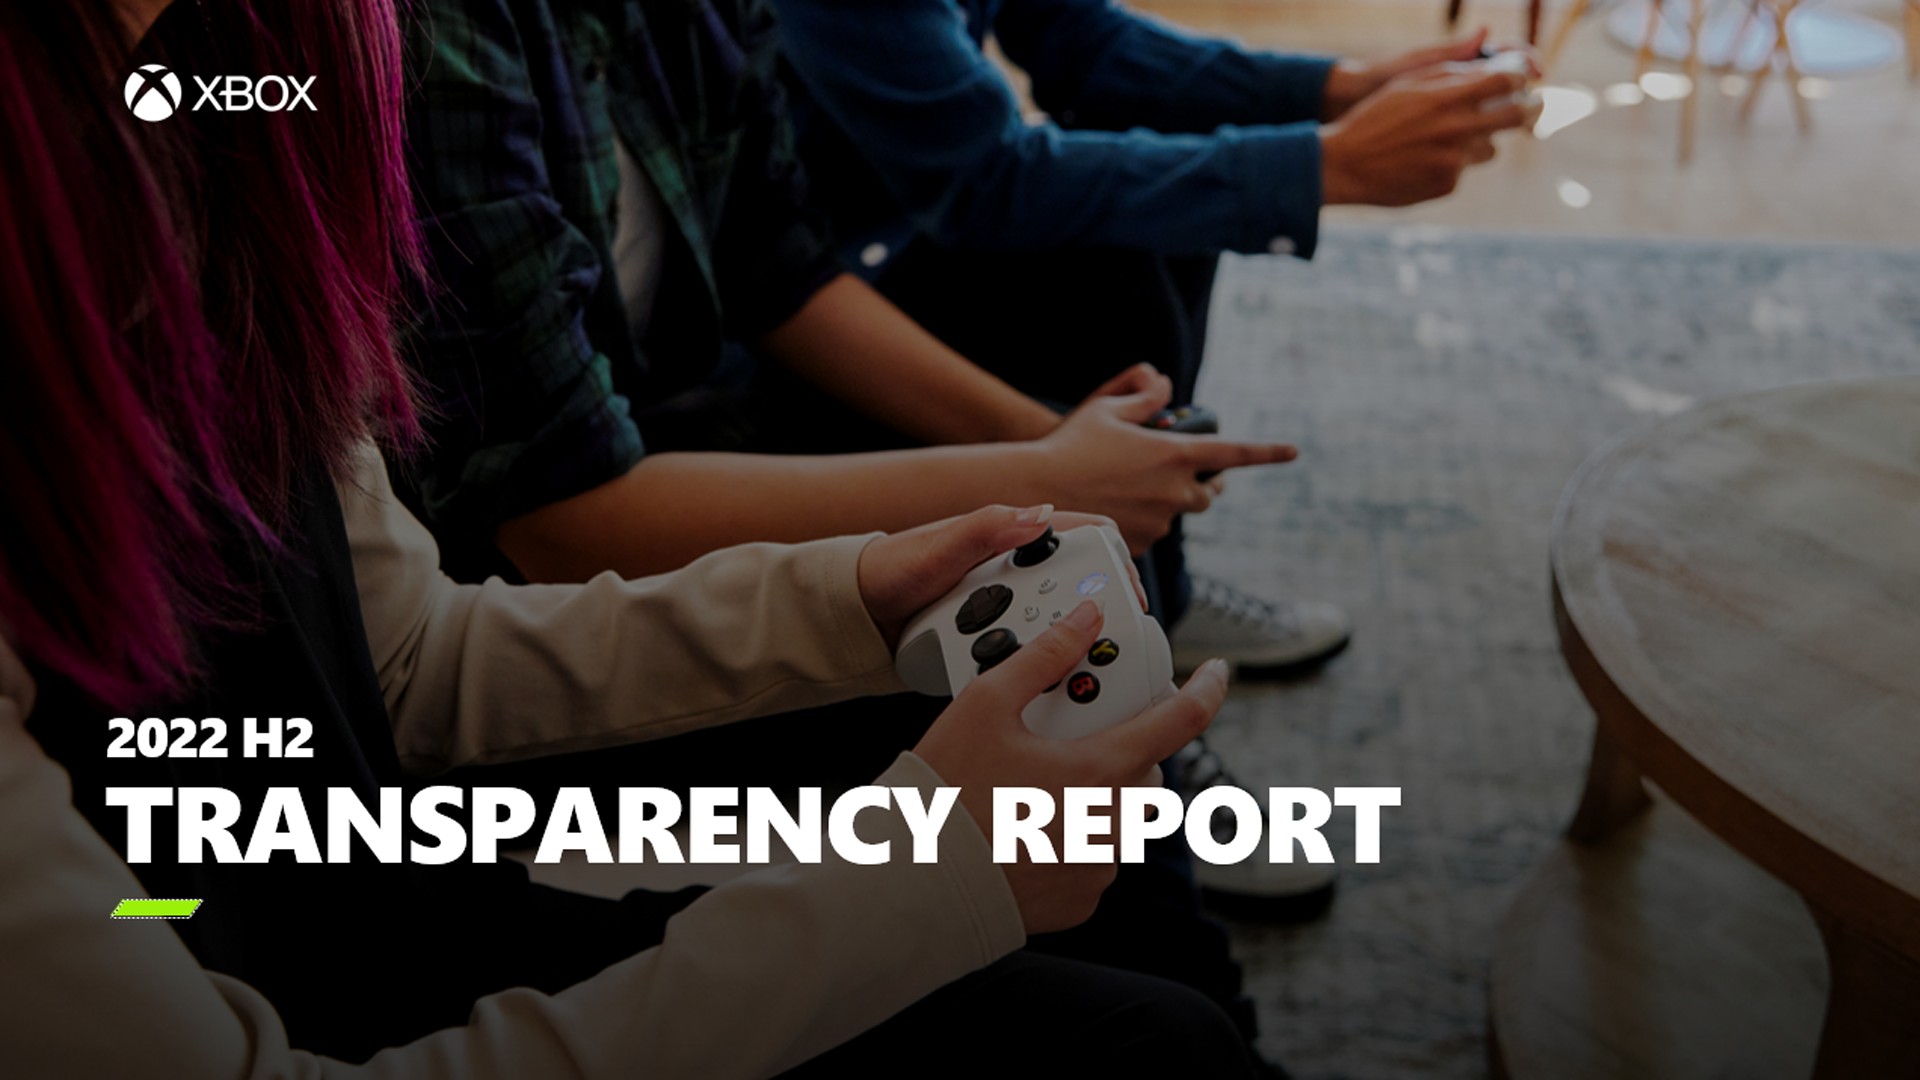 Transparency Report Hero Image